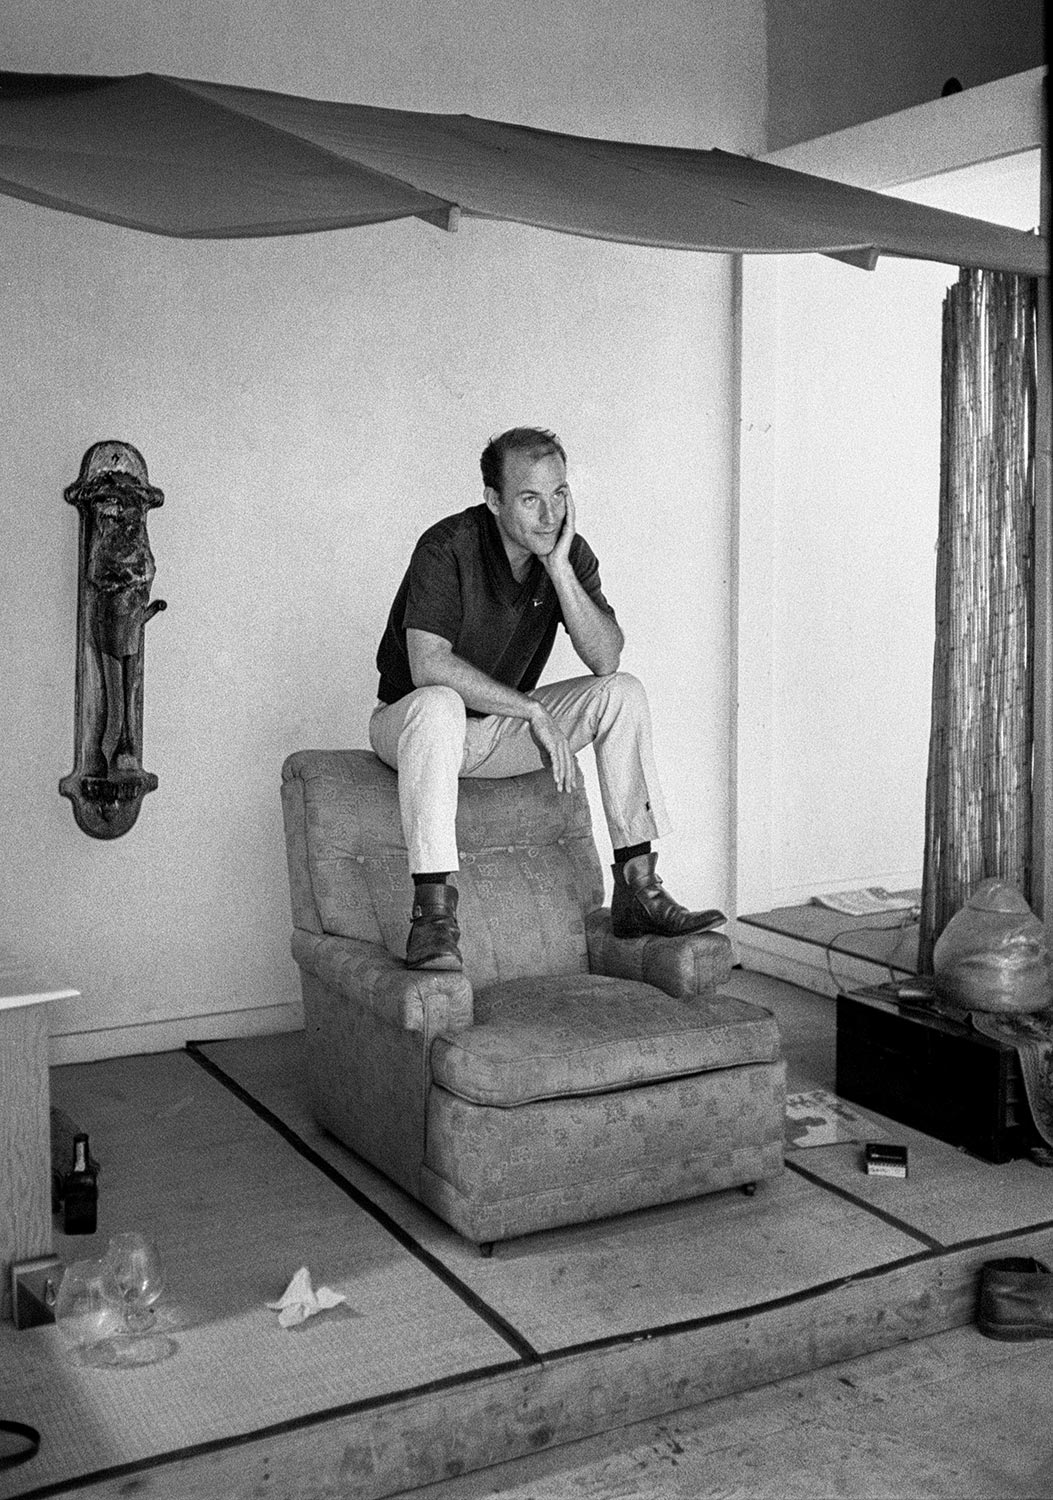  ROBERT IRWIN   Atop his studio chair, Venice, California, 1962  